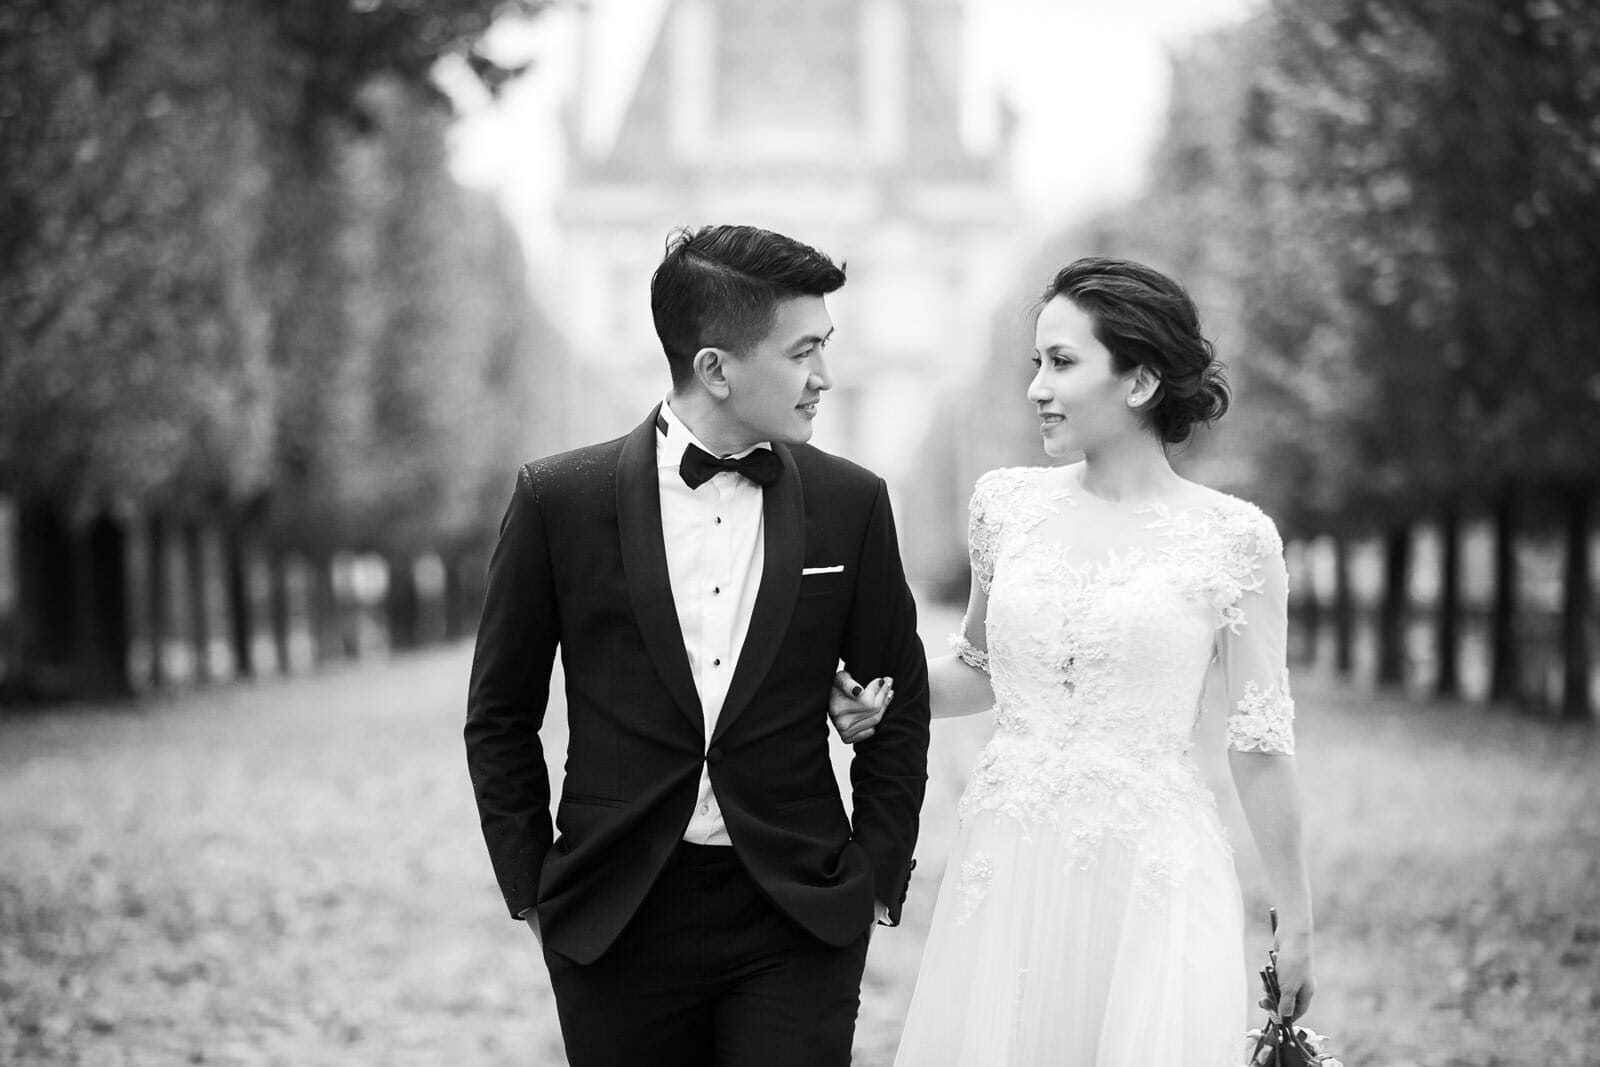 Beautiful Paris pre-wedding photos in the Tuileries Garden